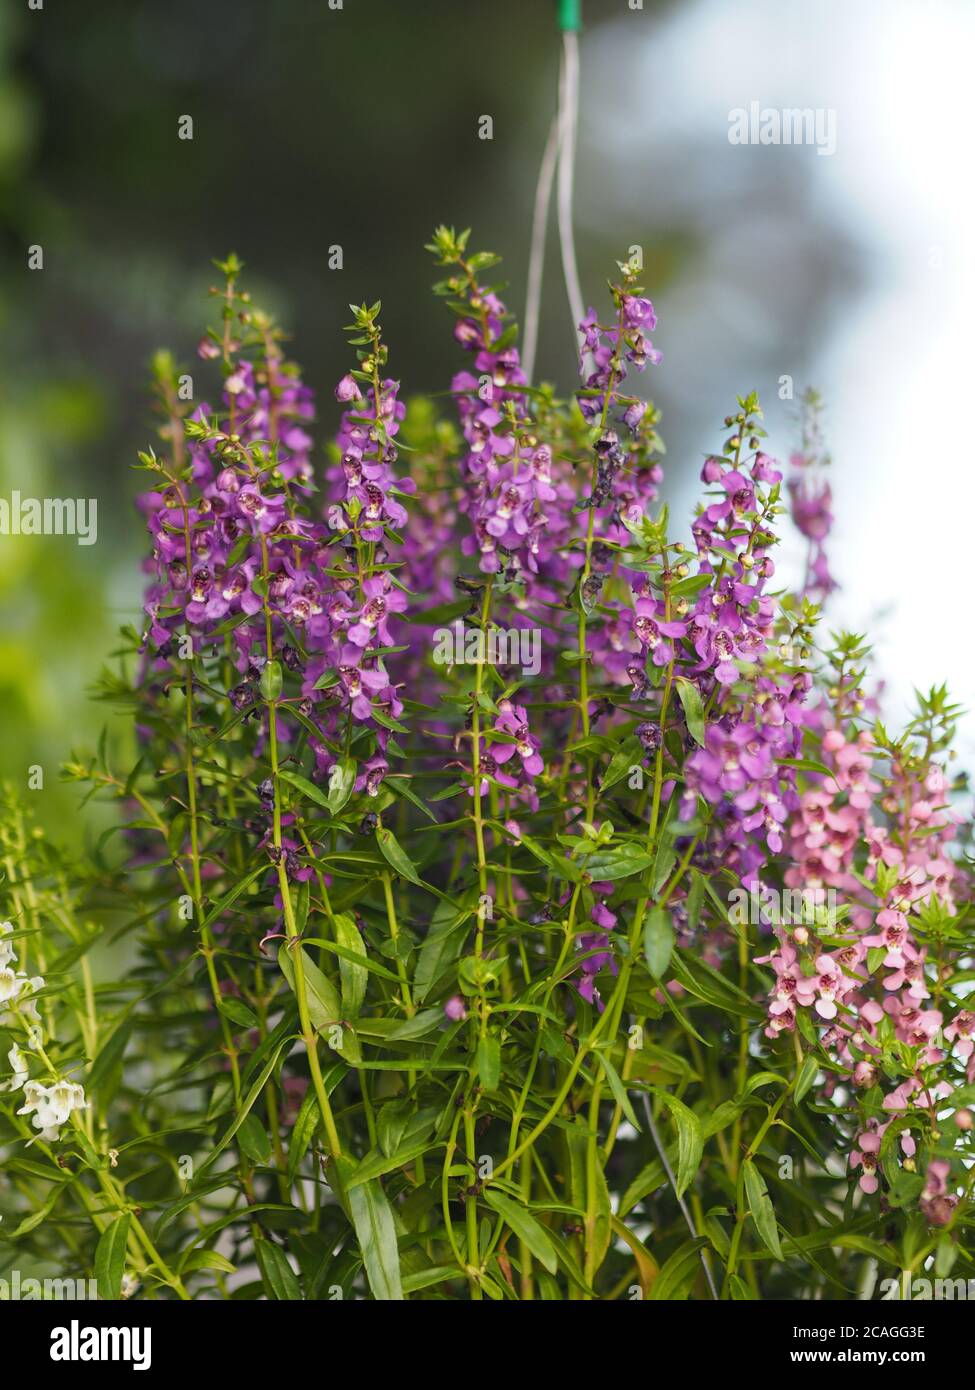 Forget me Not  Angelonia goyazensis Benth, Digitalis solicariifolia name purple flower blooming in green plastic pot hanging Stock Photo